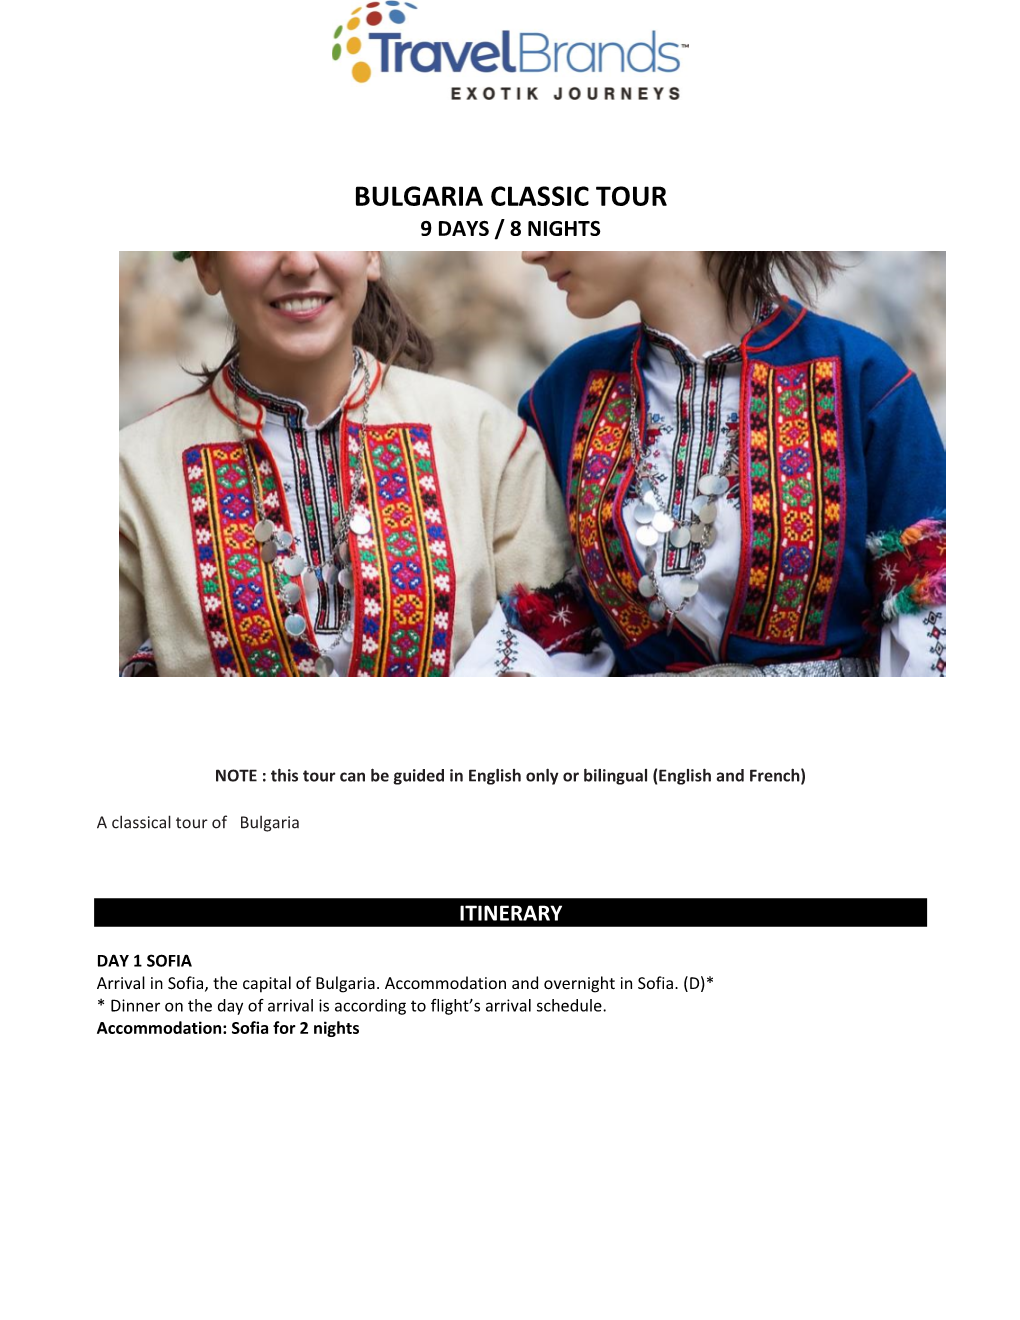 Bulgaria Classic Tour 9 Days / 8 Nights